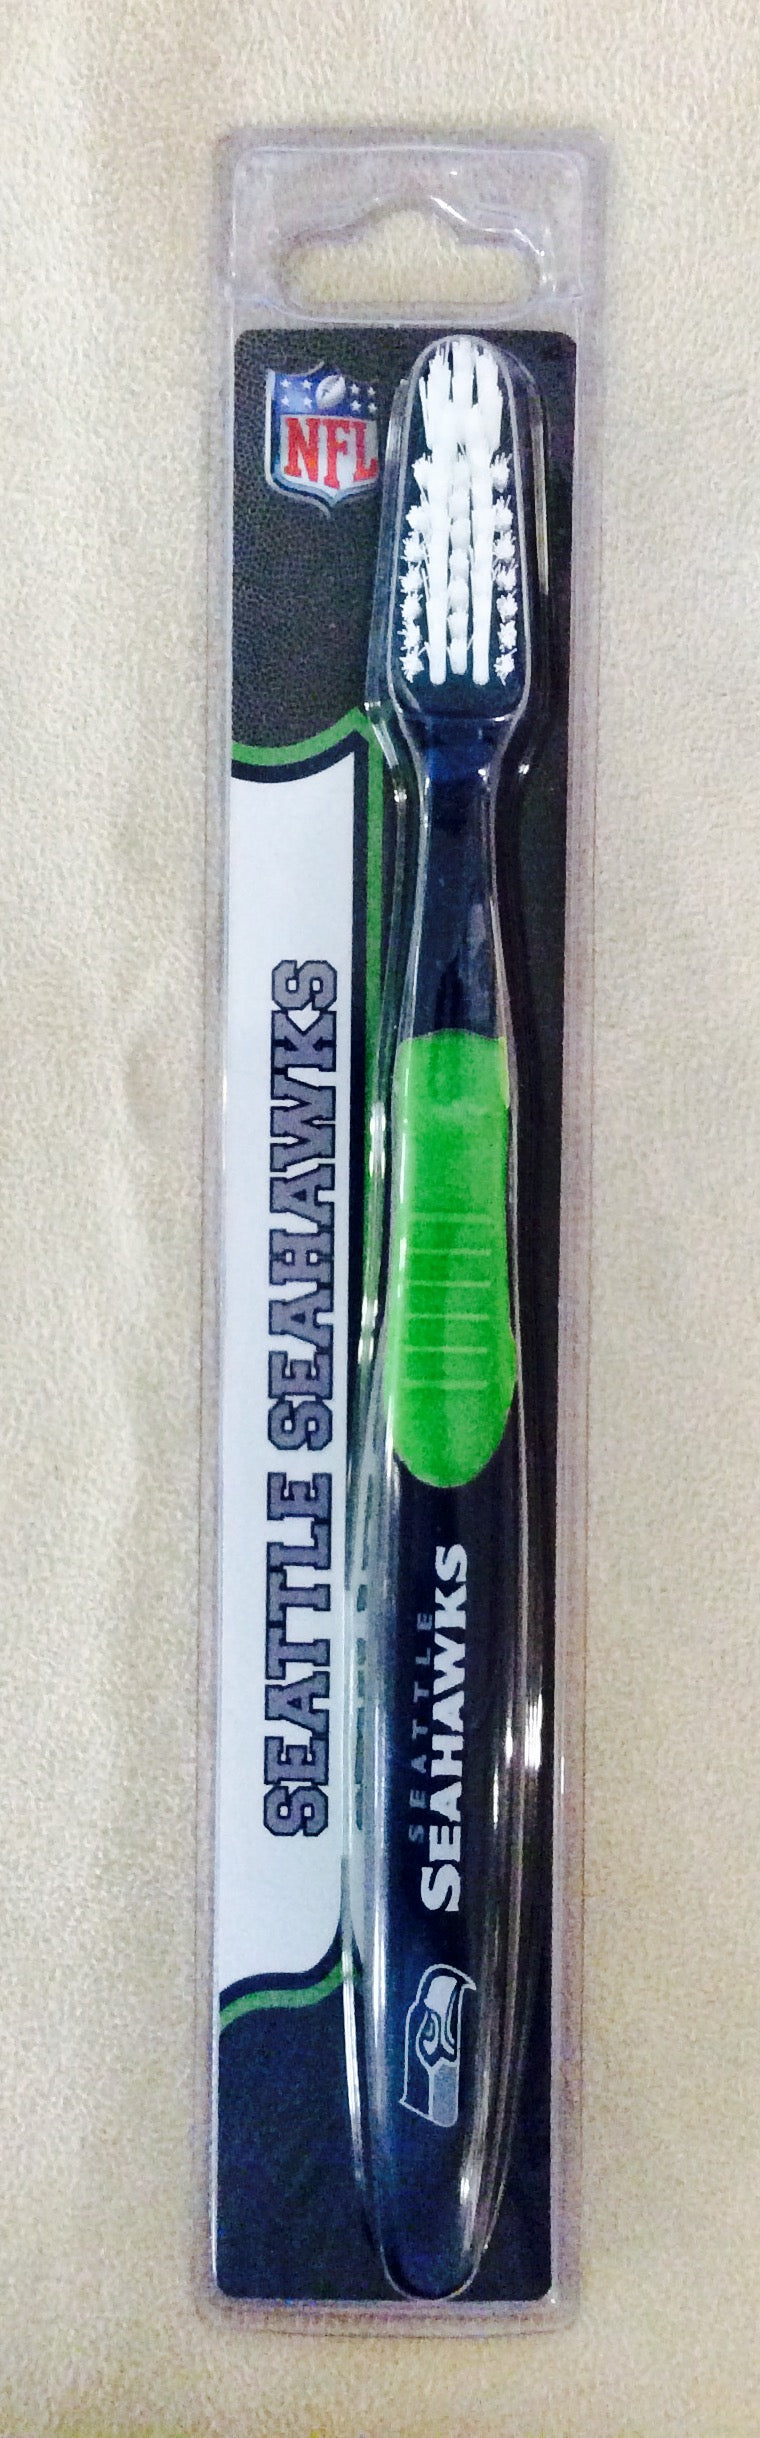 Seahawks Toothbrush #35-81556